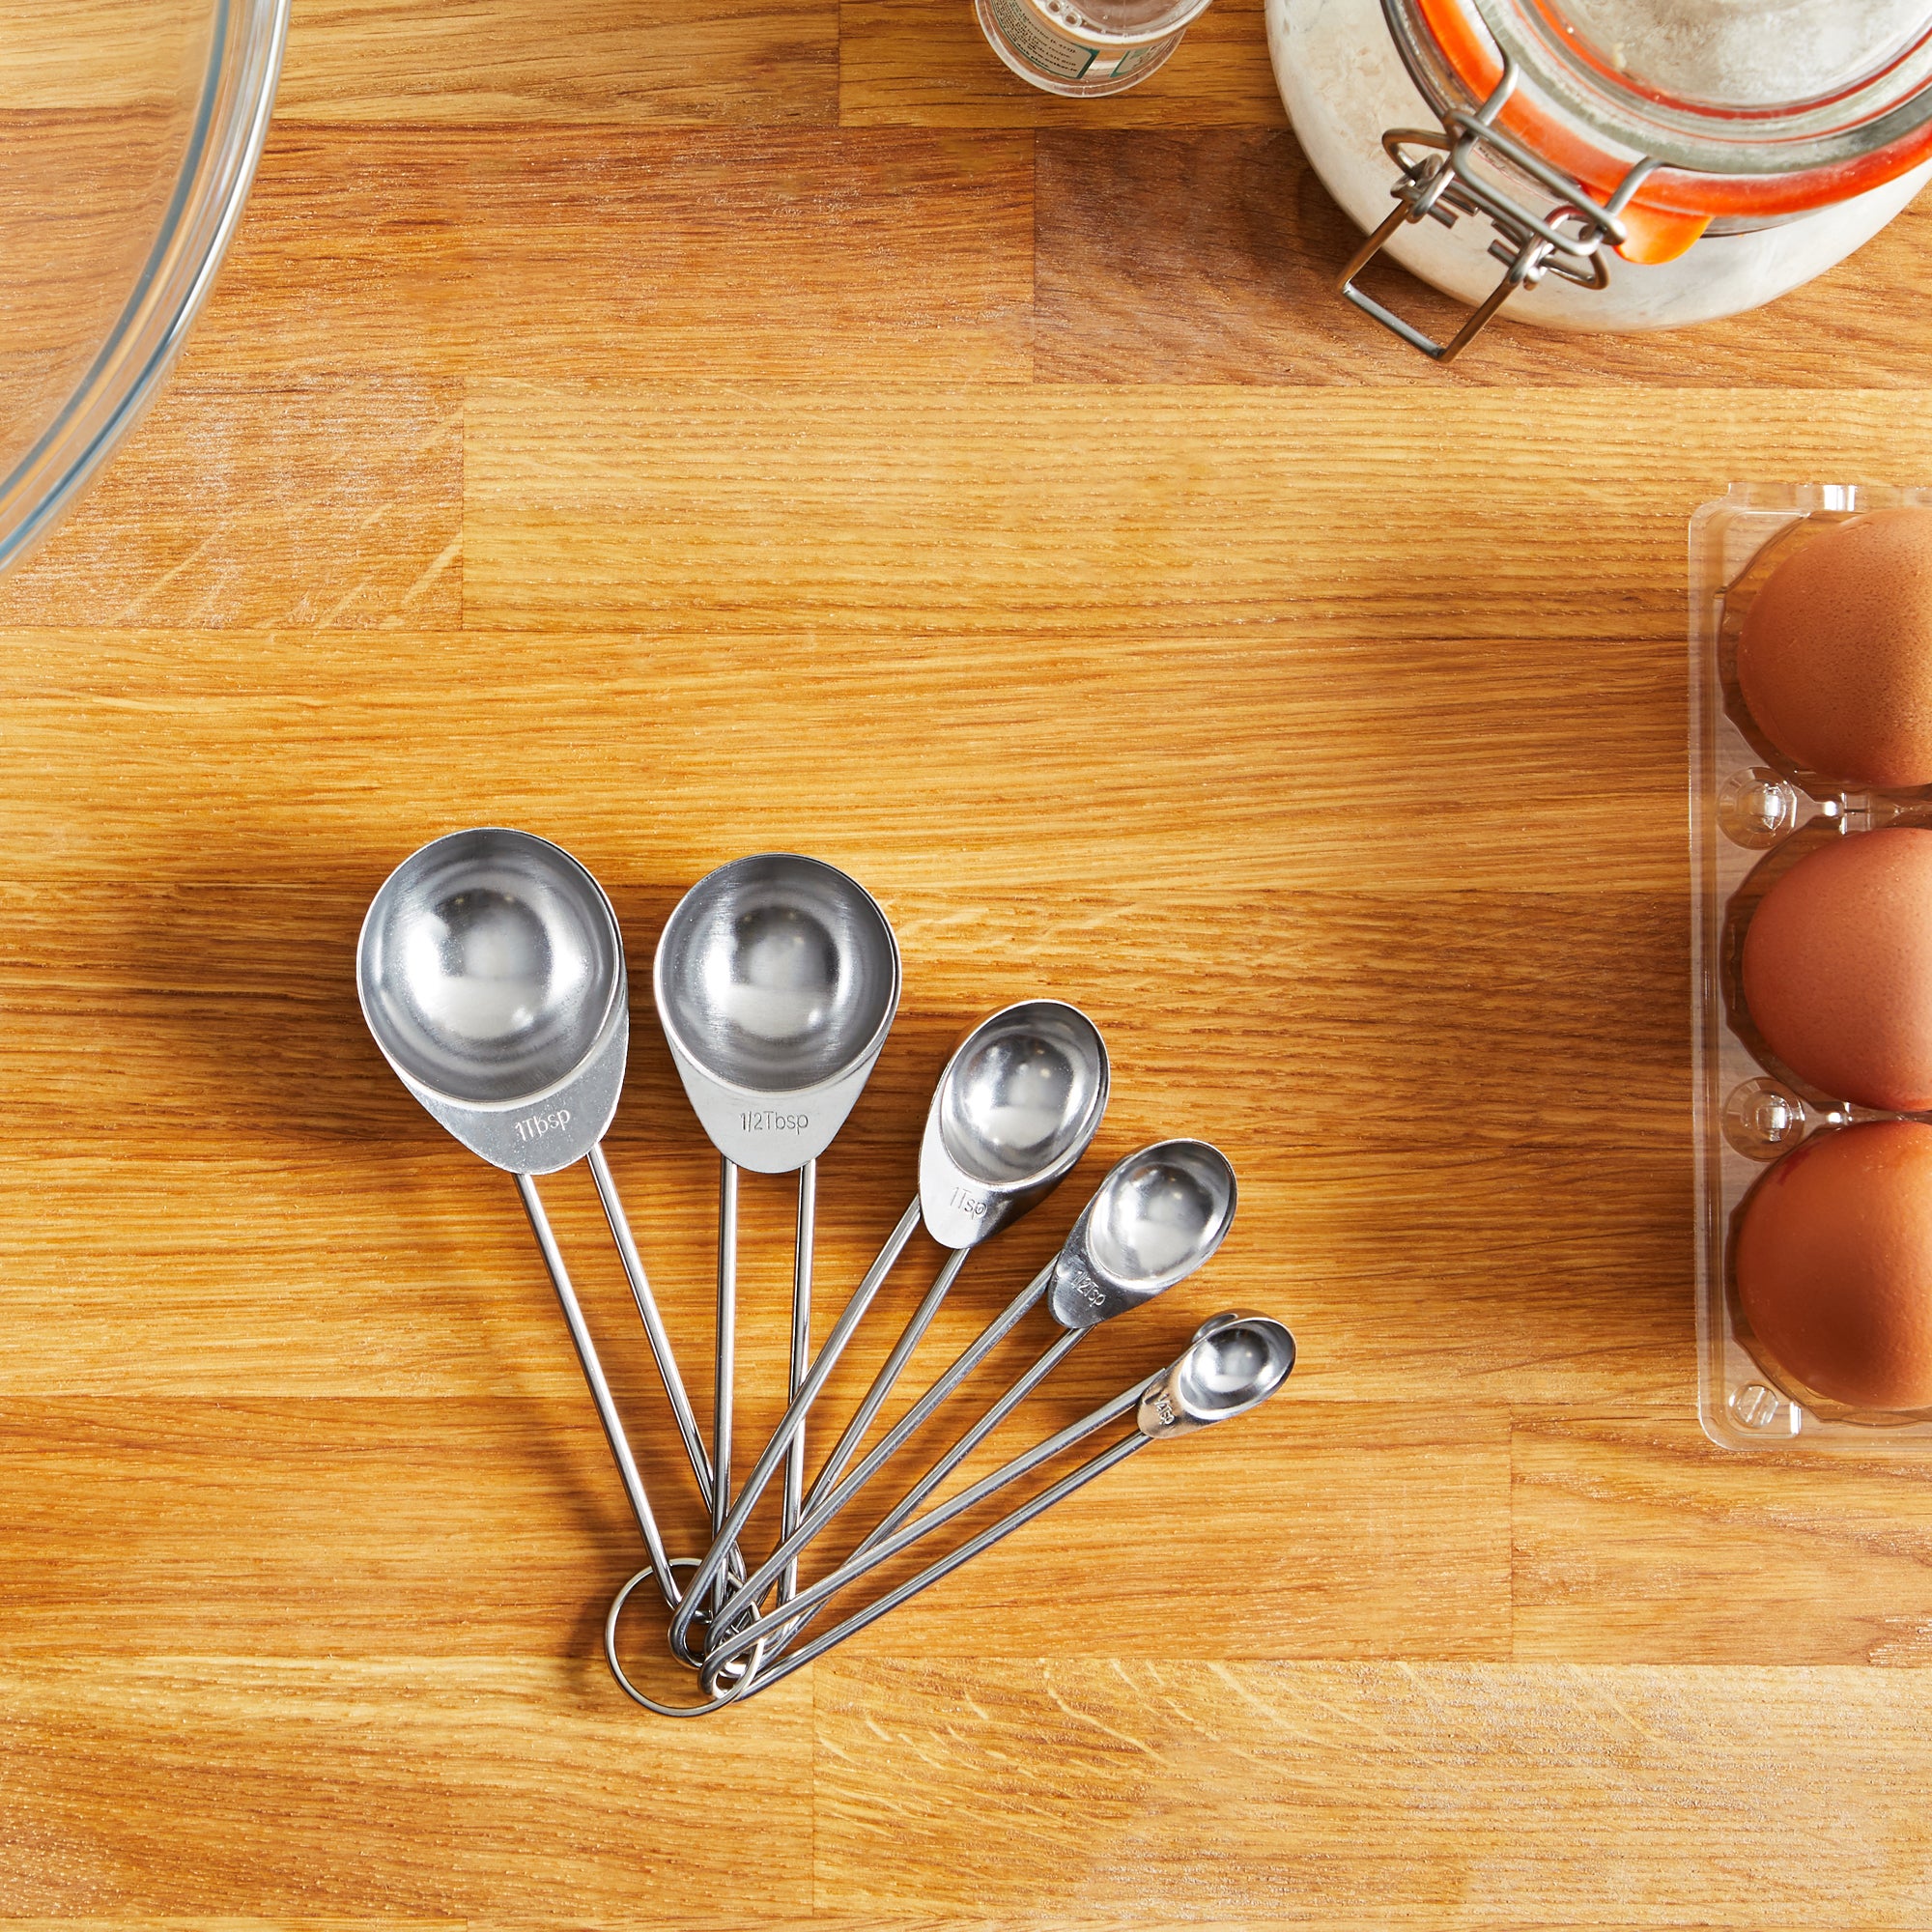 Spoons With Long Handles Stainless Steel Measuring Spoons For Measure Dry  Ingredients Scoop The Coffee 